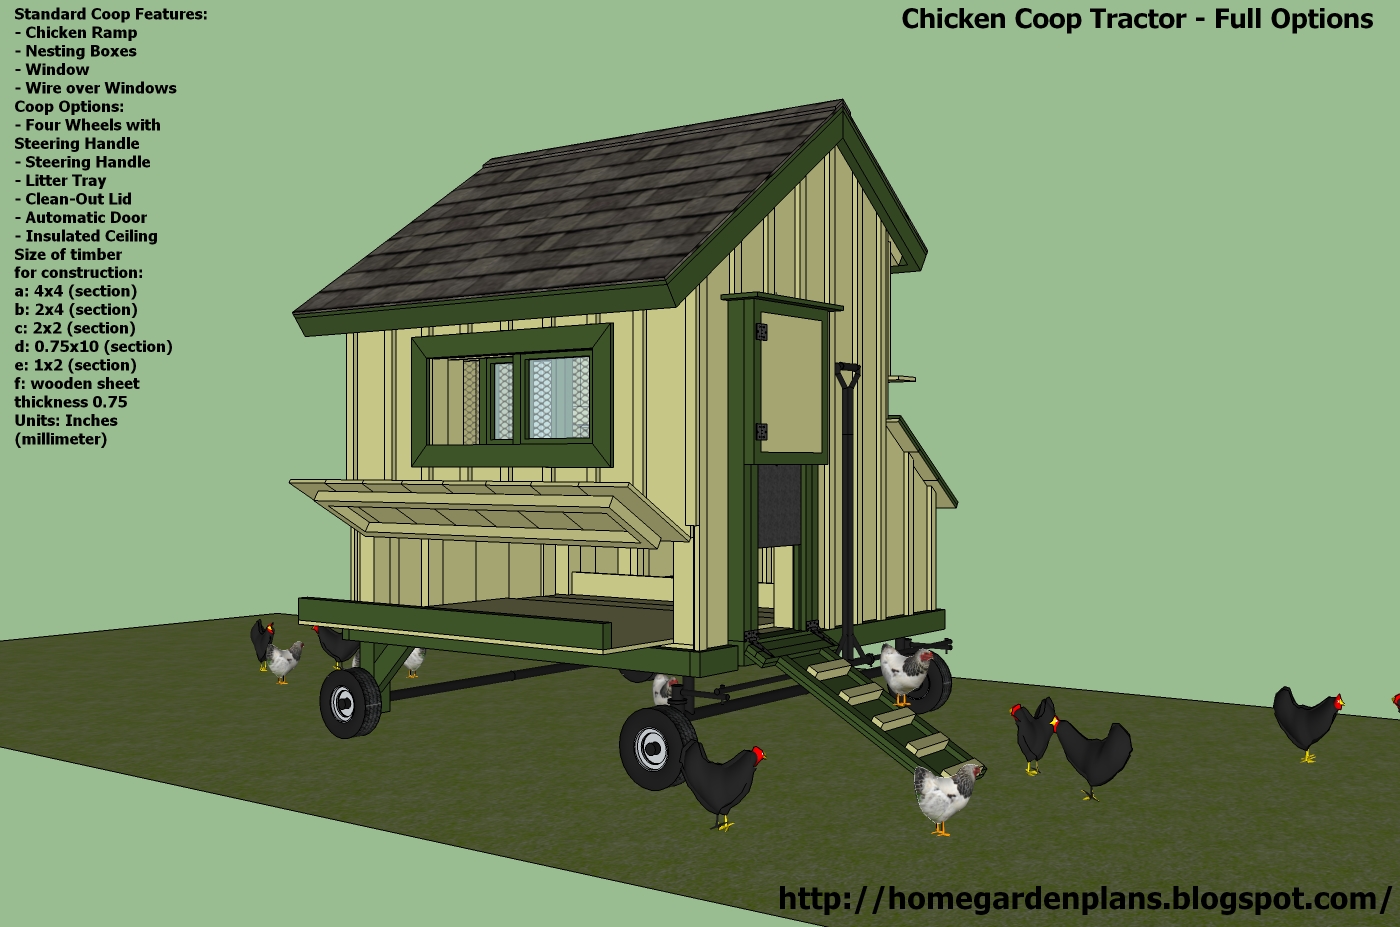 plans: T200 - Chicken Coop Tractor Plans - Free Chicken Coop Plans ...